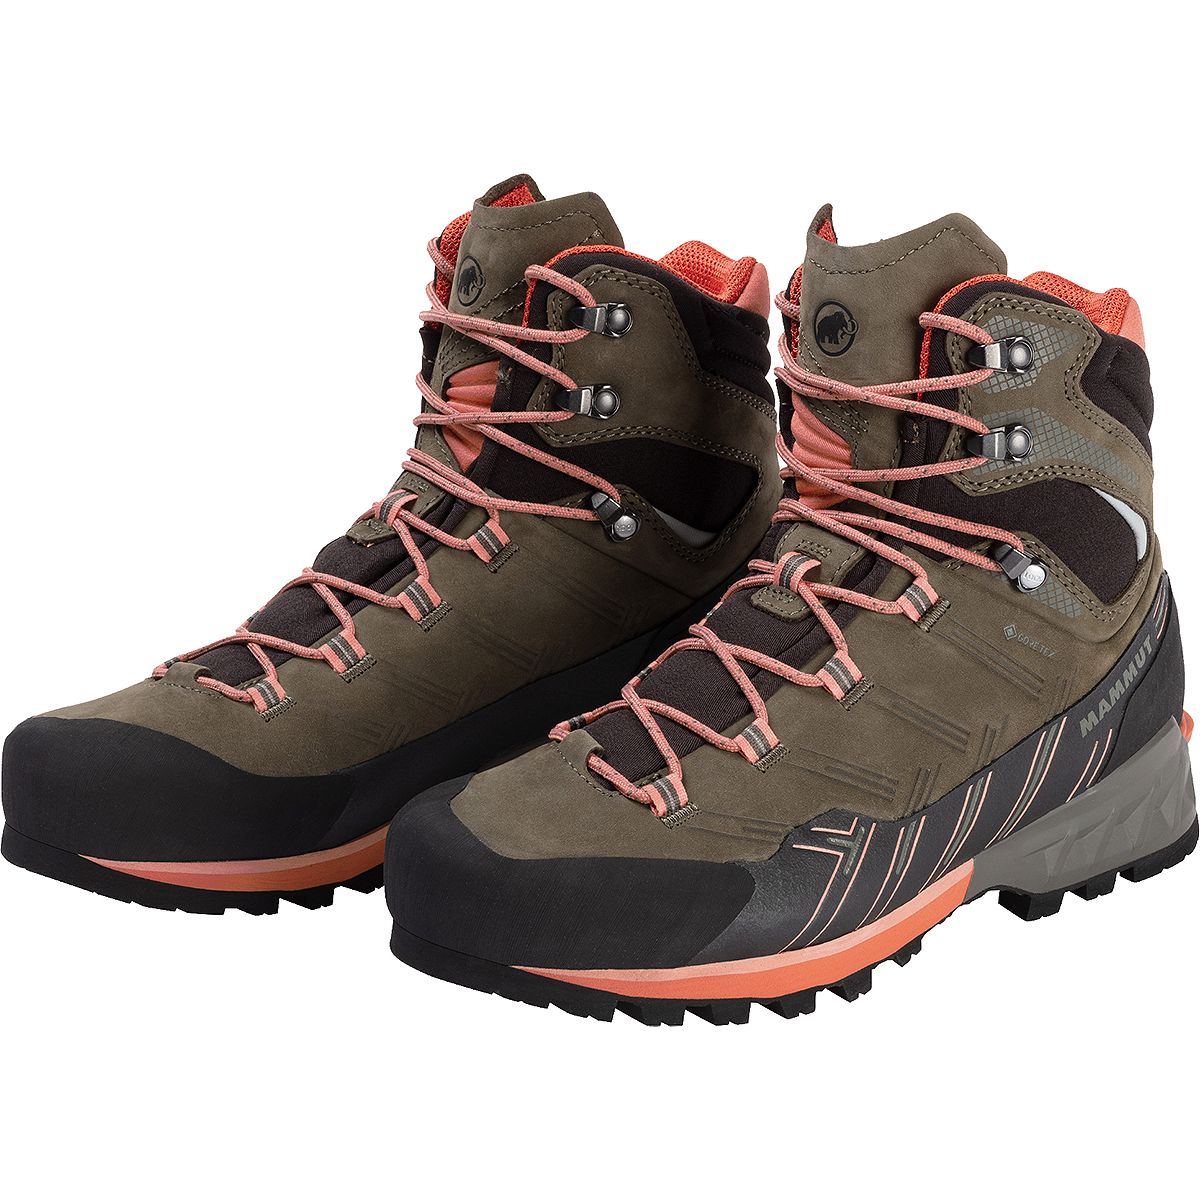 Mammut Kento Guide High GTX Mountaineering Boot - Women's - Footwear